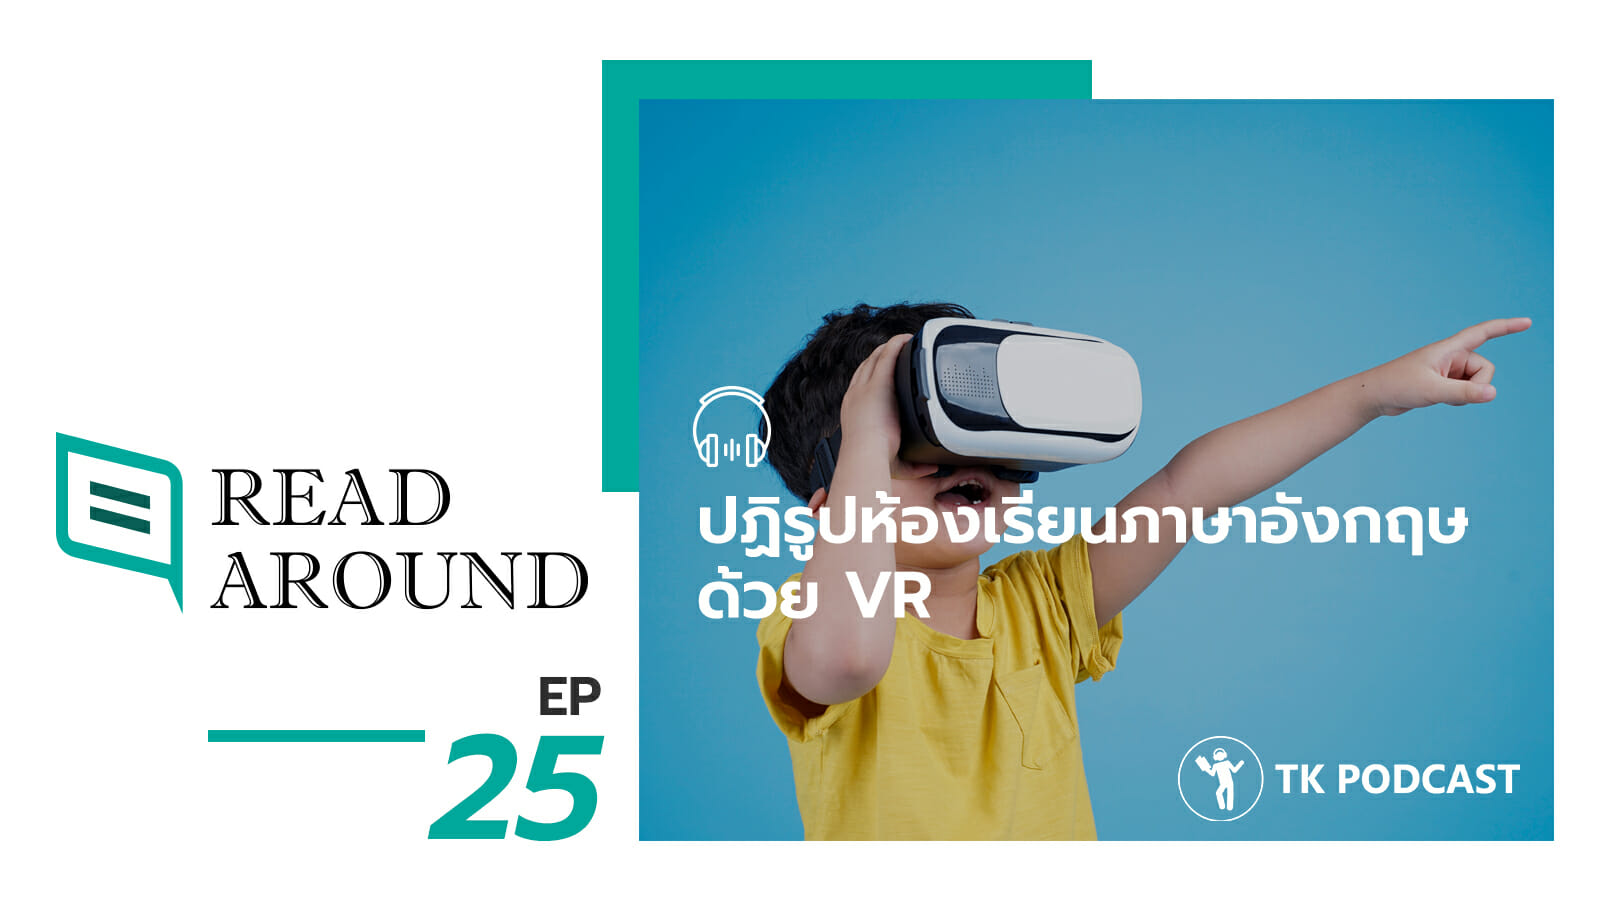 Read Around EP.25 ปฏิรูปห้องเรียนภาษาอังกฤษด้วย VR